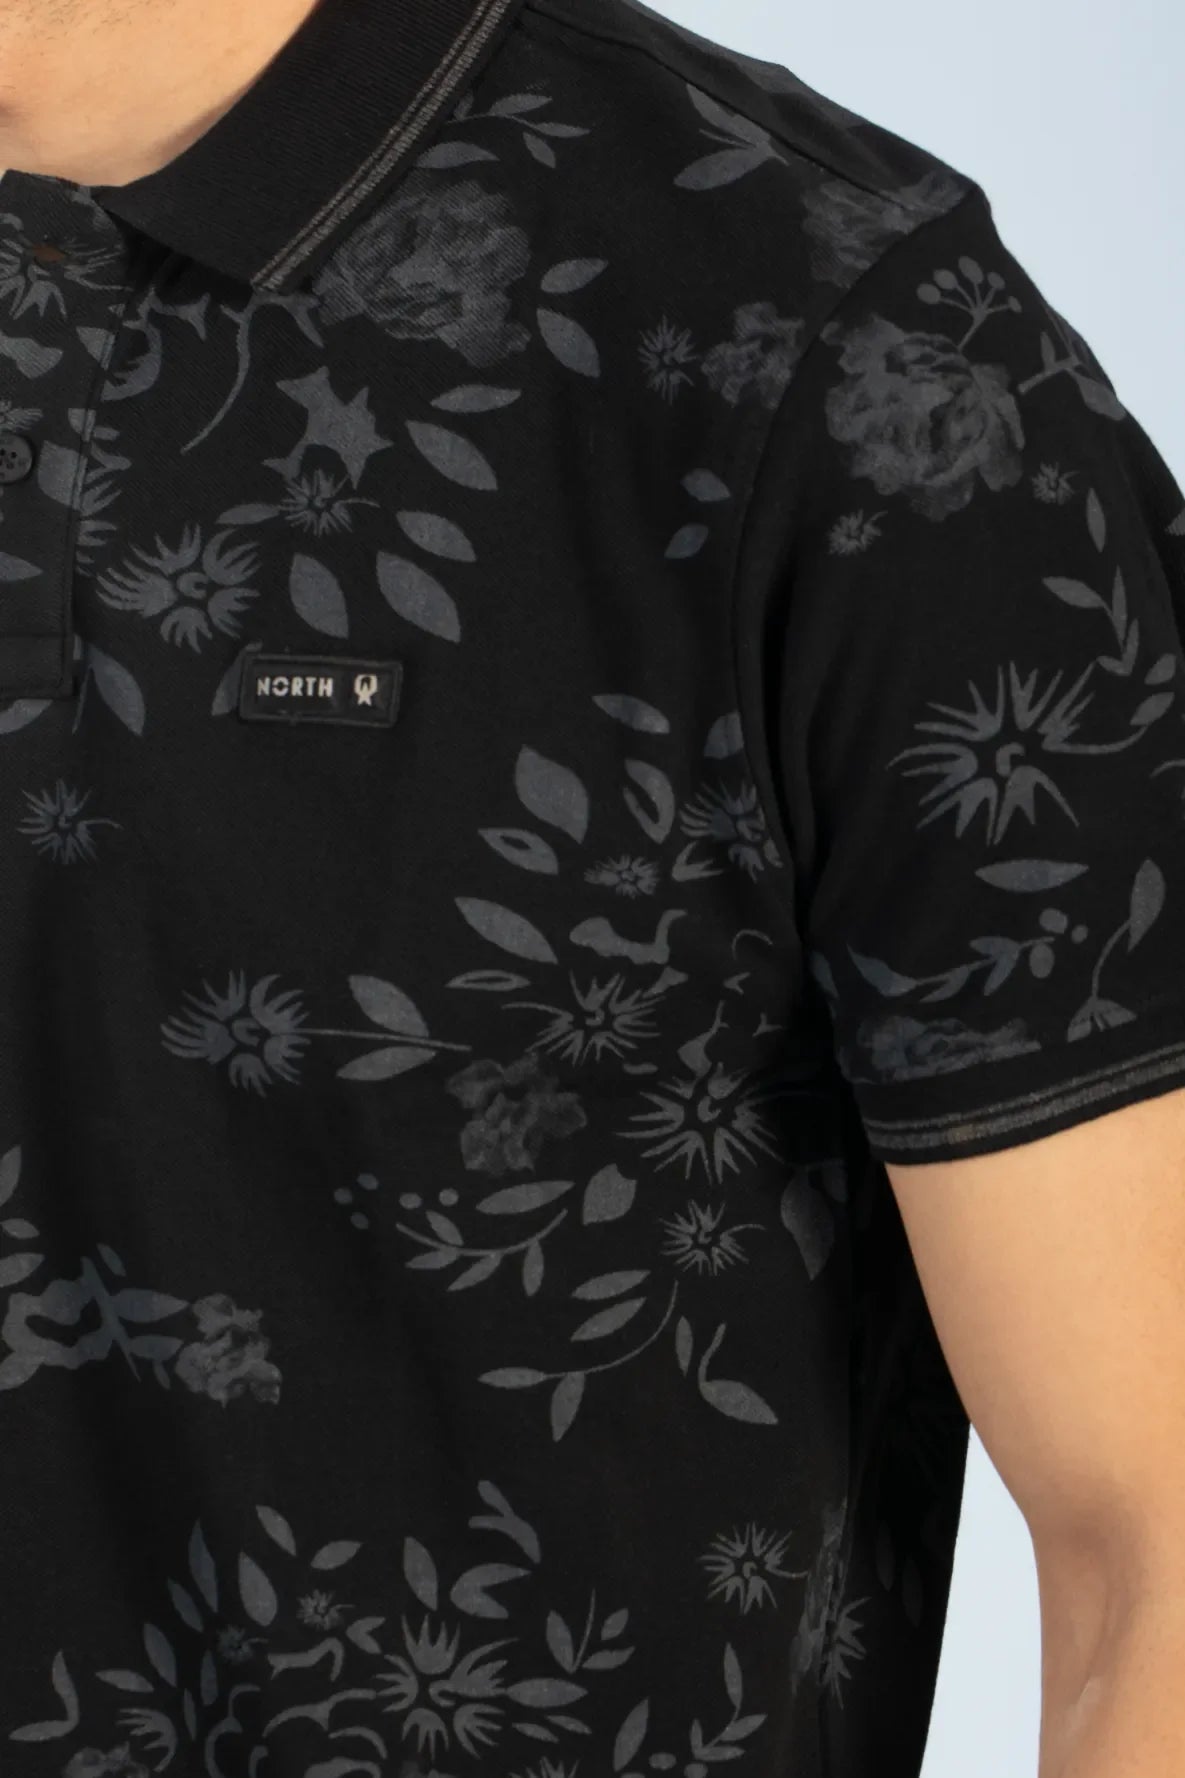 Black Polo Men's Floral Printed T Shirt